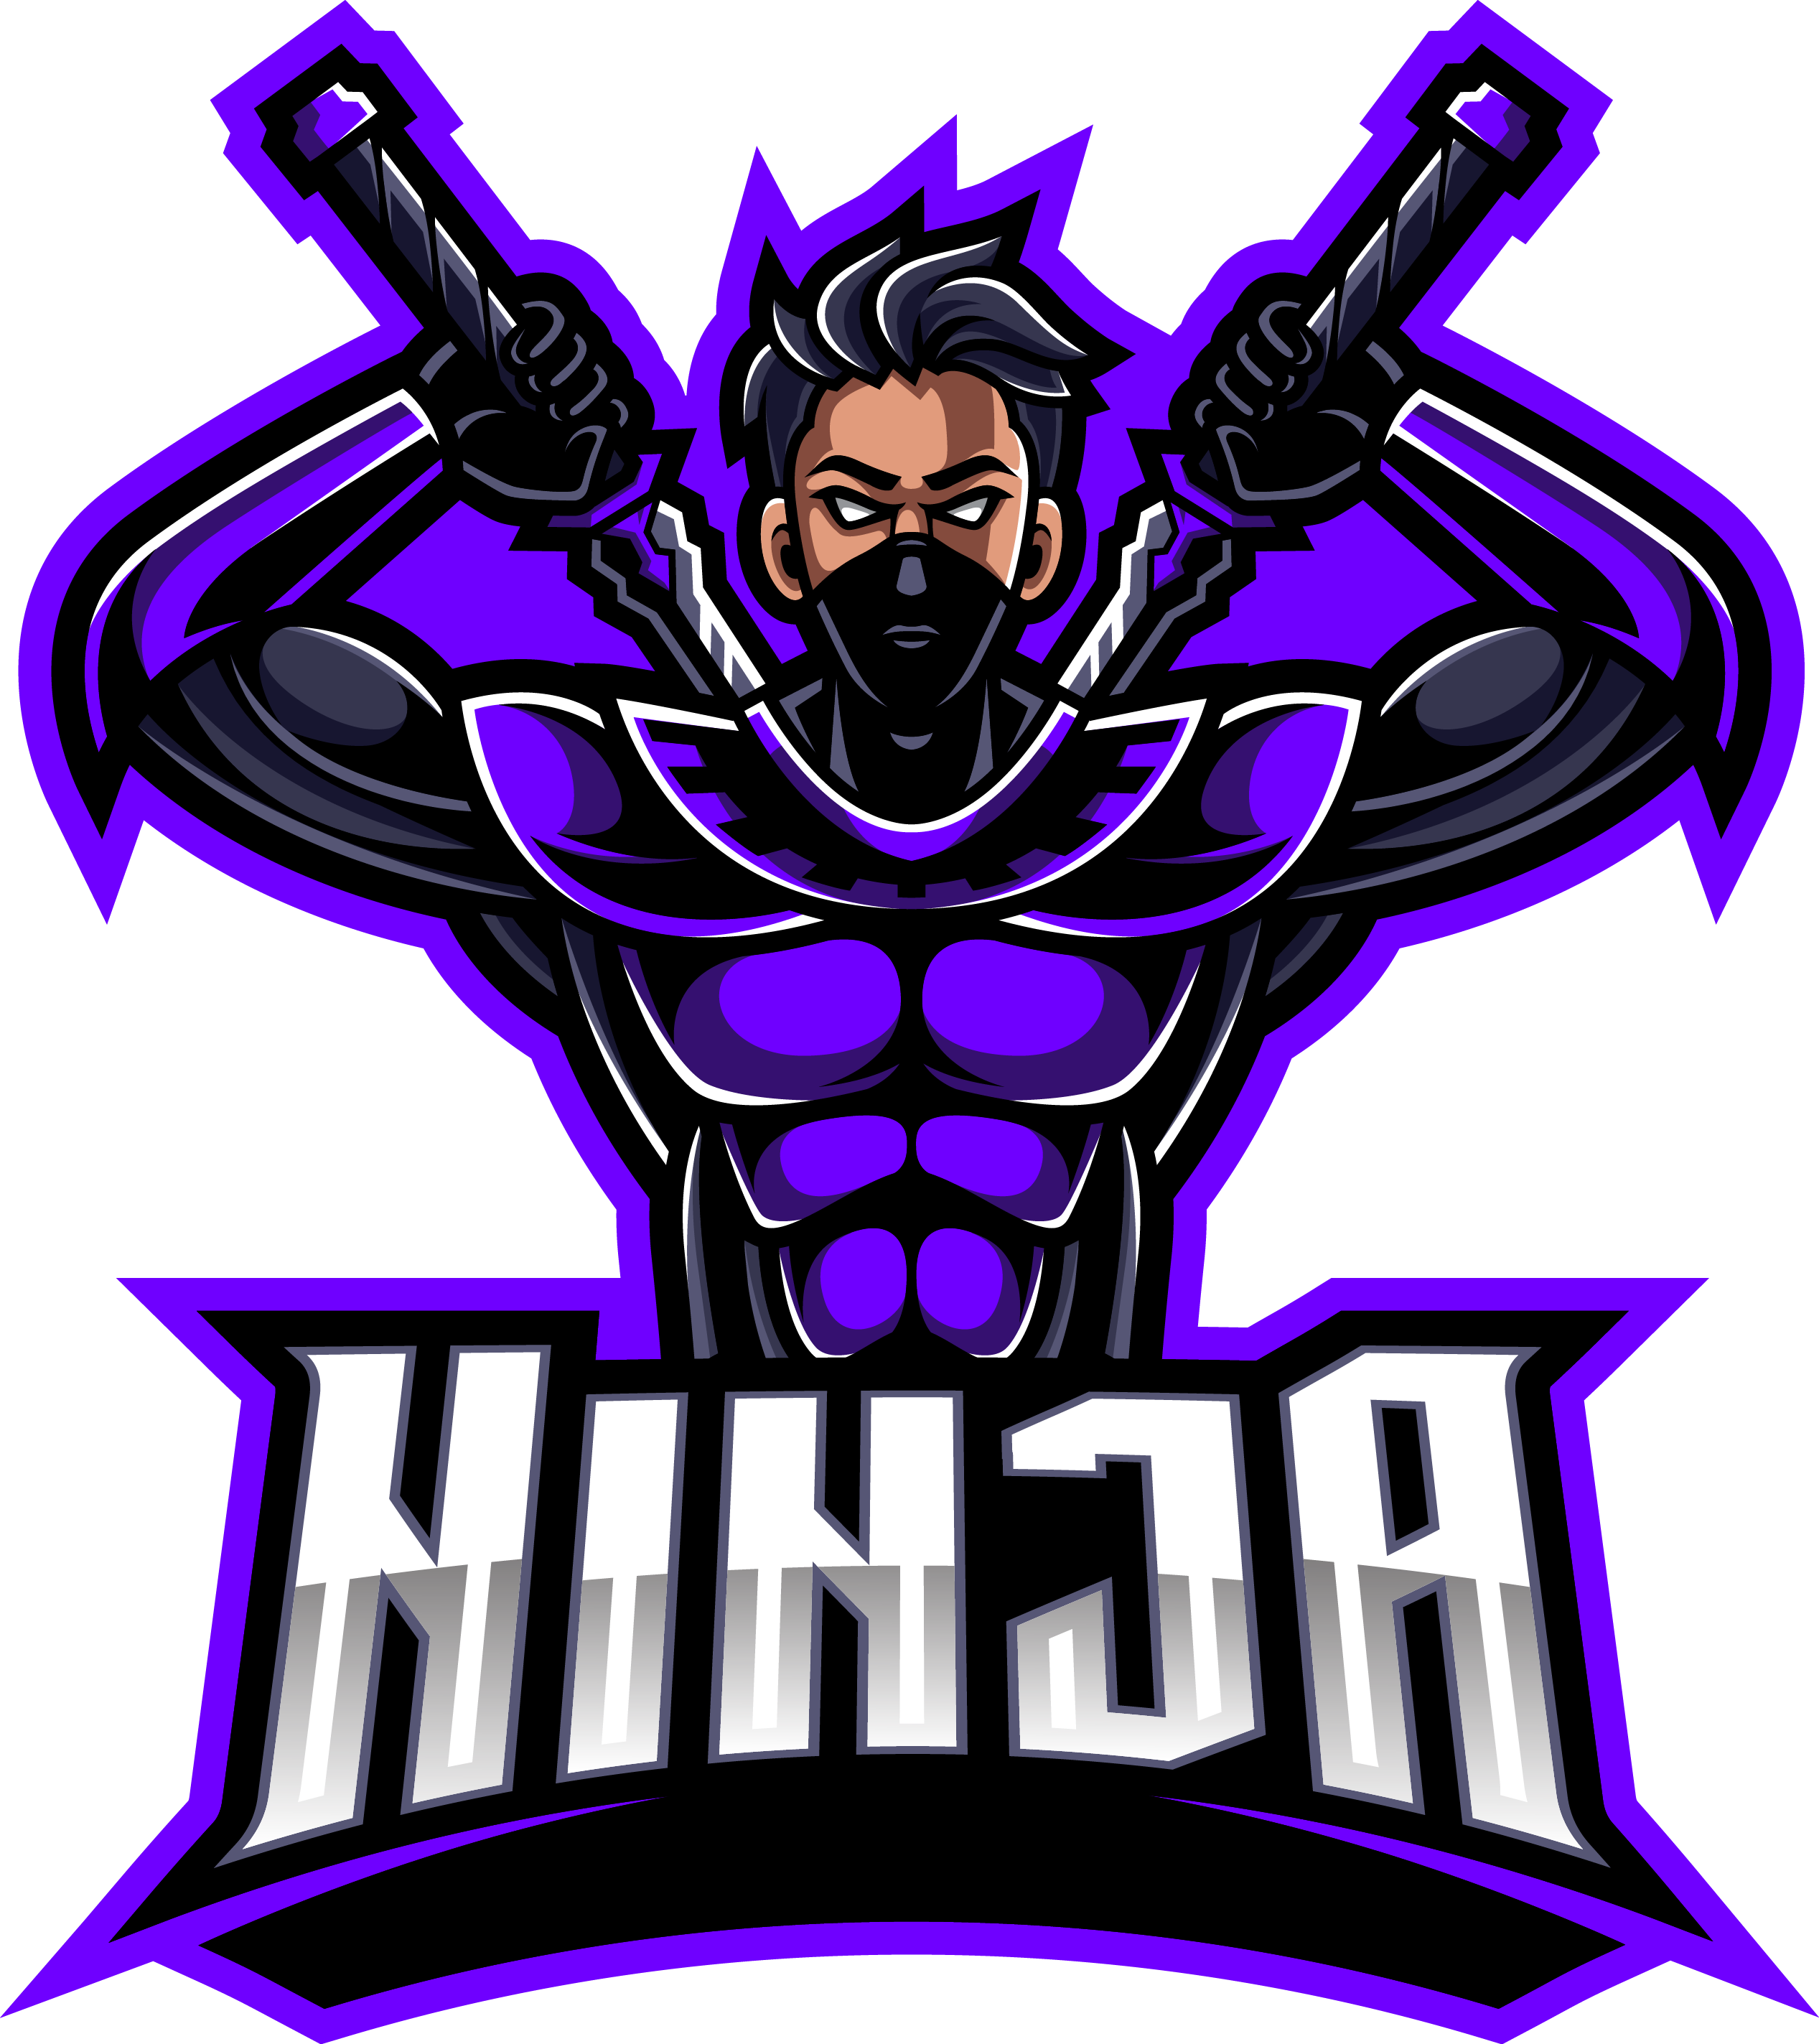 Ninja PNG Transparente - PNG All